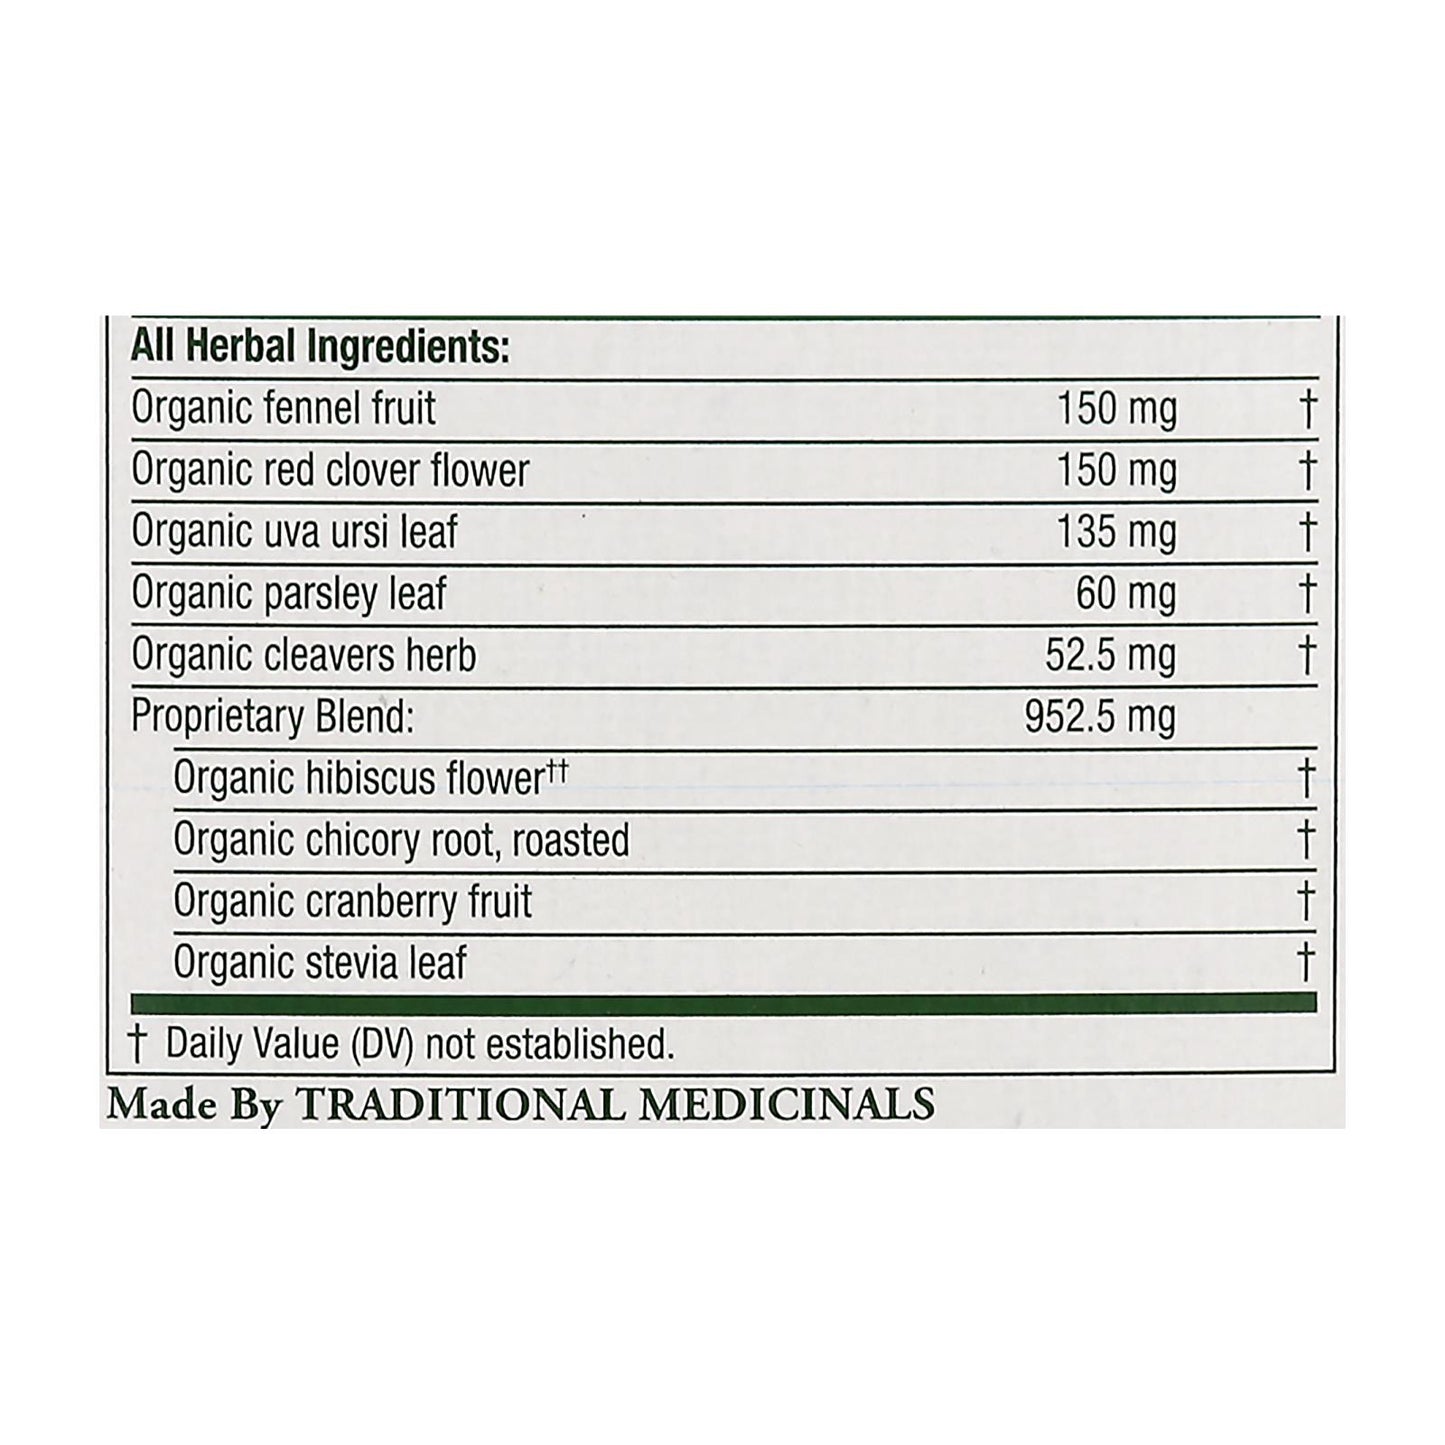 
                  
                    Traditional Medicinals Organic Weightless Cranberry Herbal Tea, 16 Tea Bags, Case Of 6
                  
                